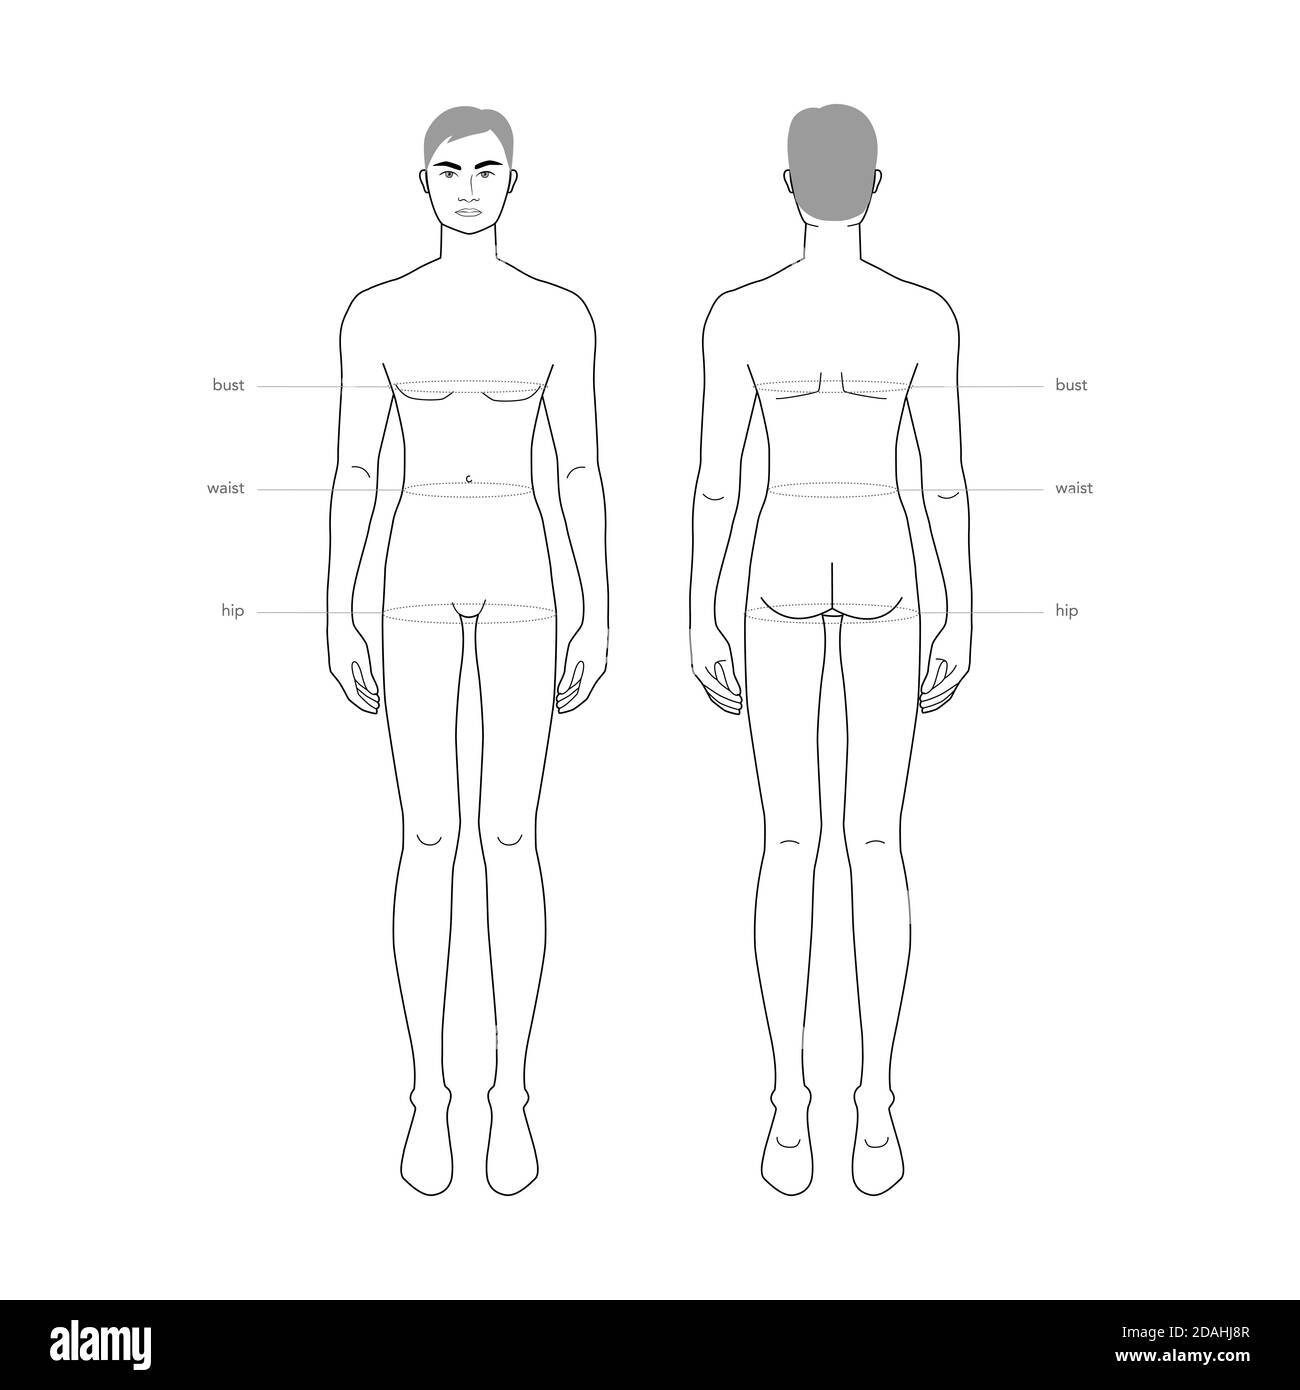 Men standard body parts terminology measurements Illustration for